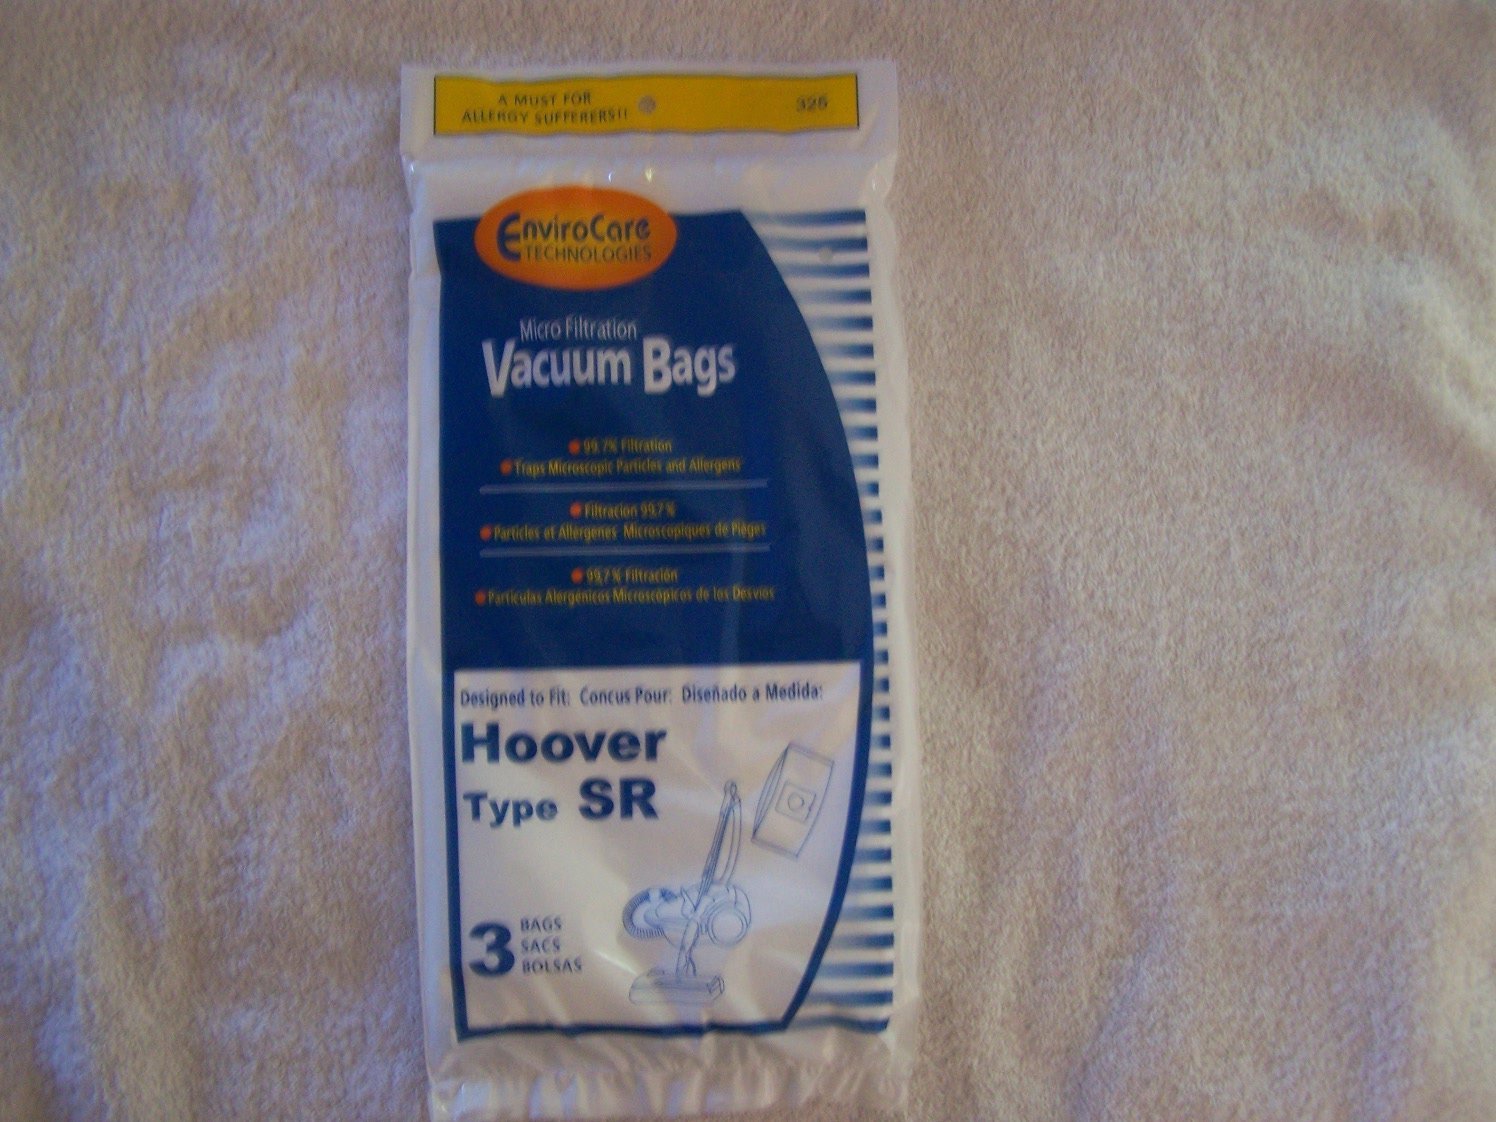 Envirocare Hoover SR Vacuum Bags for Duros / Canisters #401010SR, 3 Pack VACBAG TYPESR